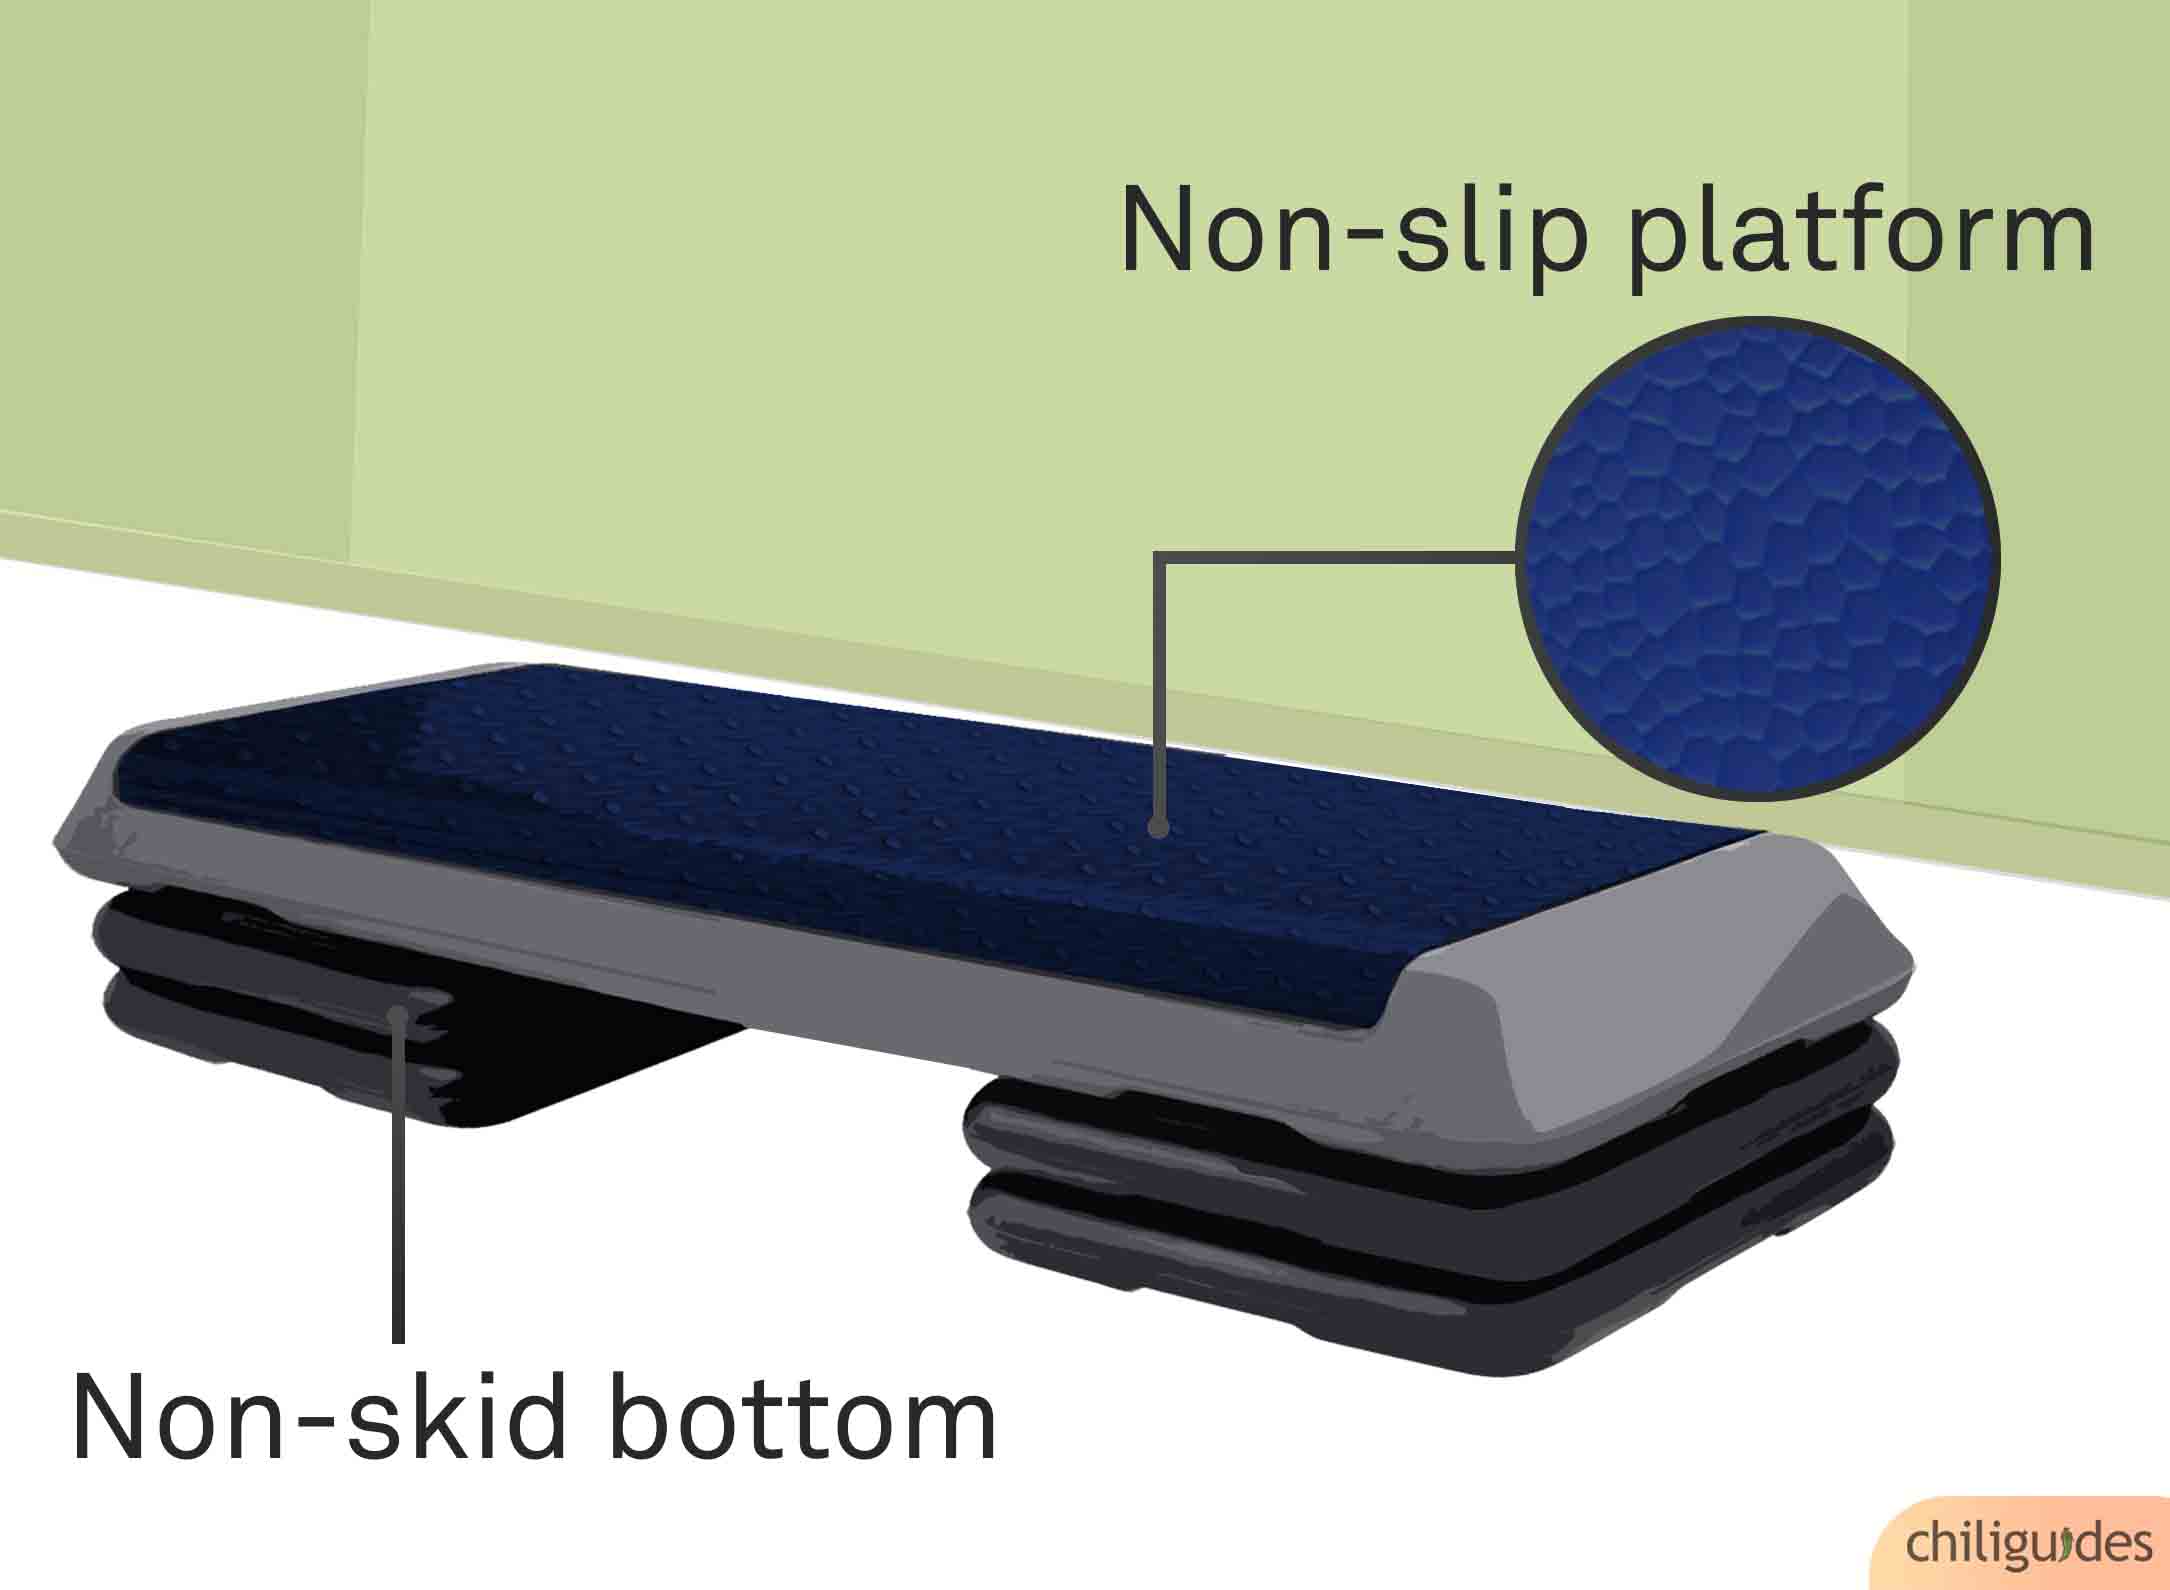 A non-slip platform and non-skid bottom are essential.